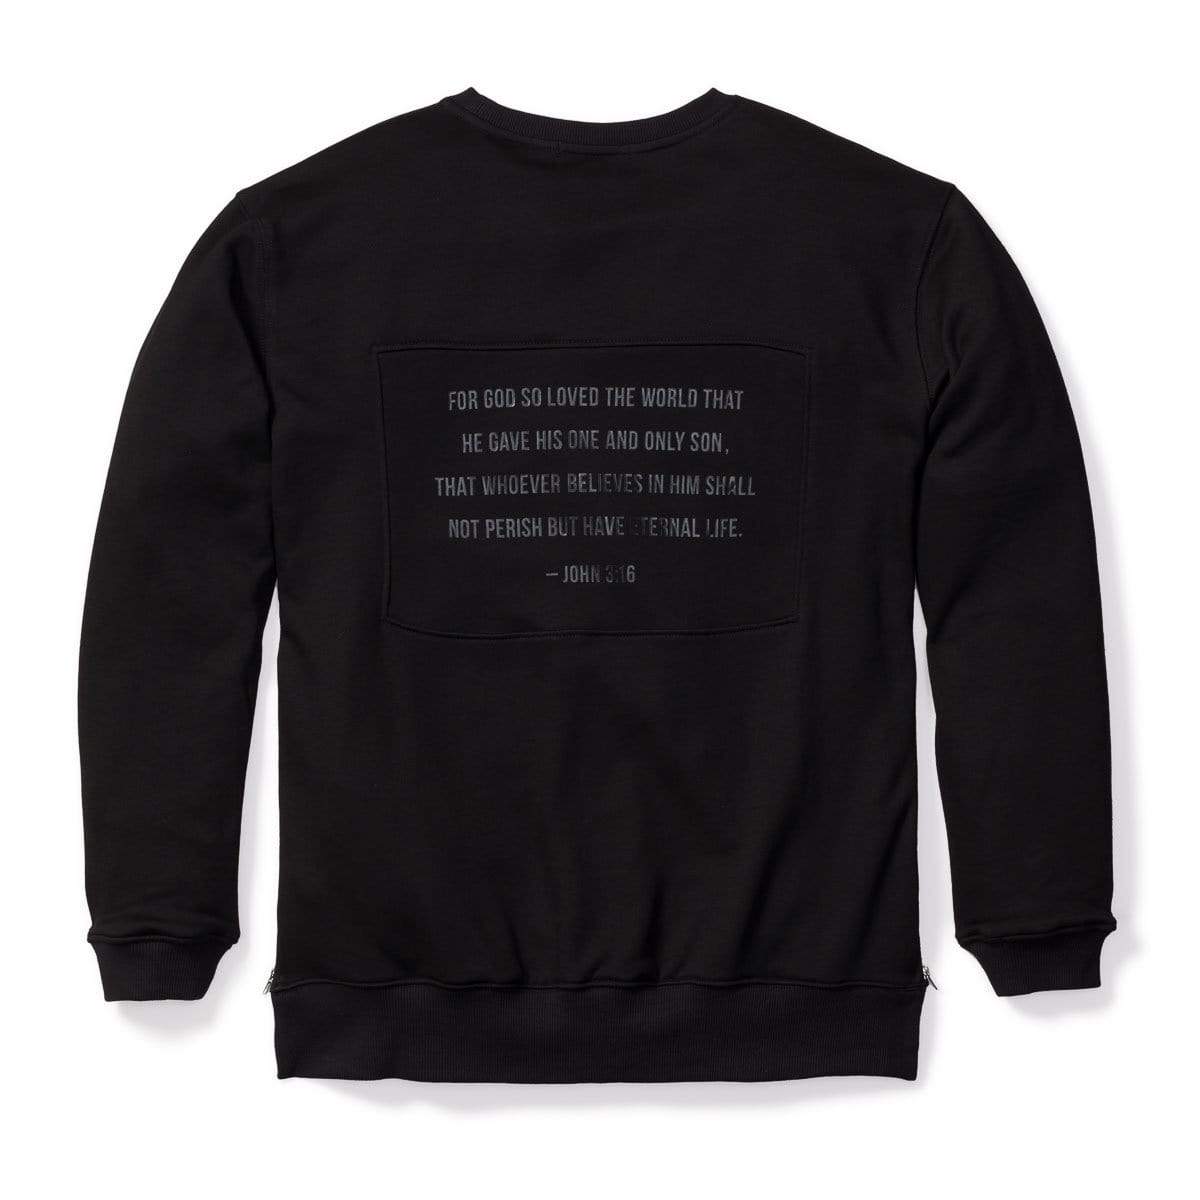 3:16 Collection Sweatshirt XS 3:16 Signature Sweatshirt - Black